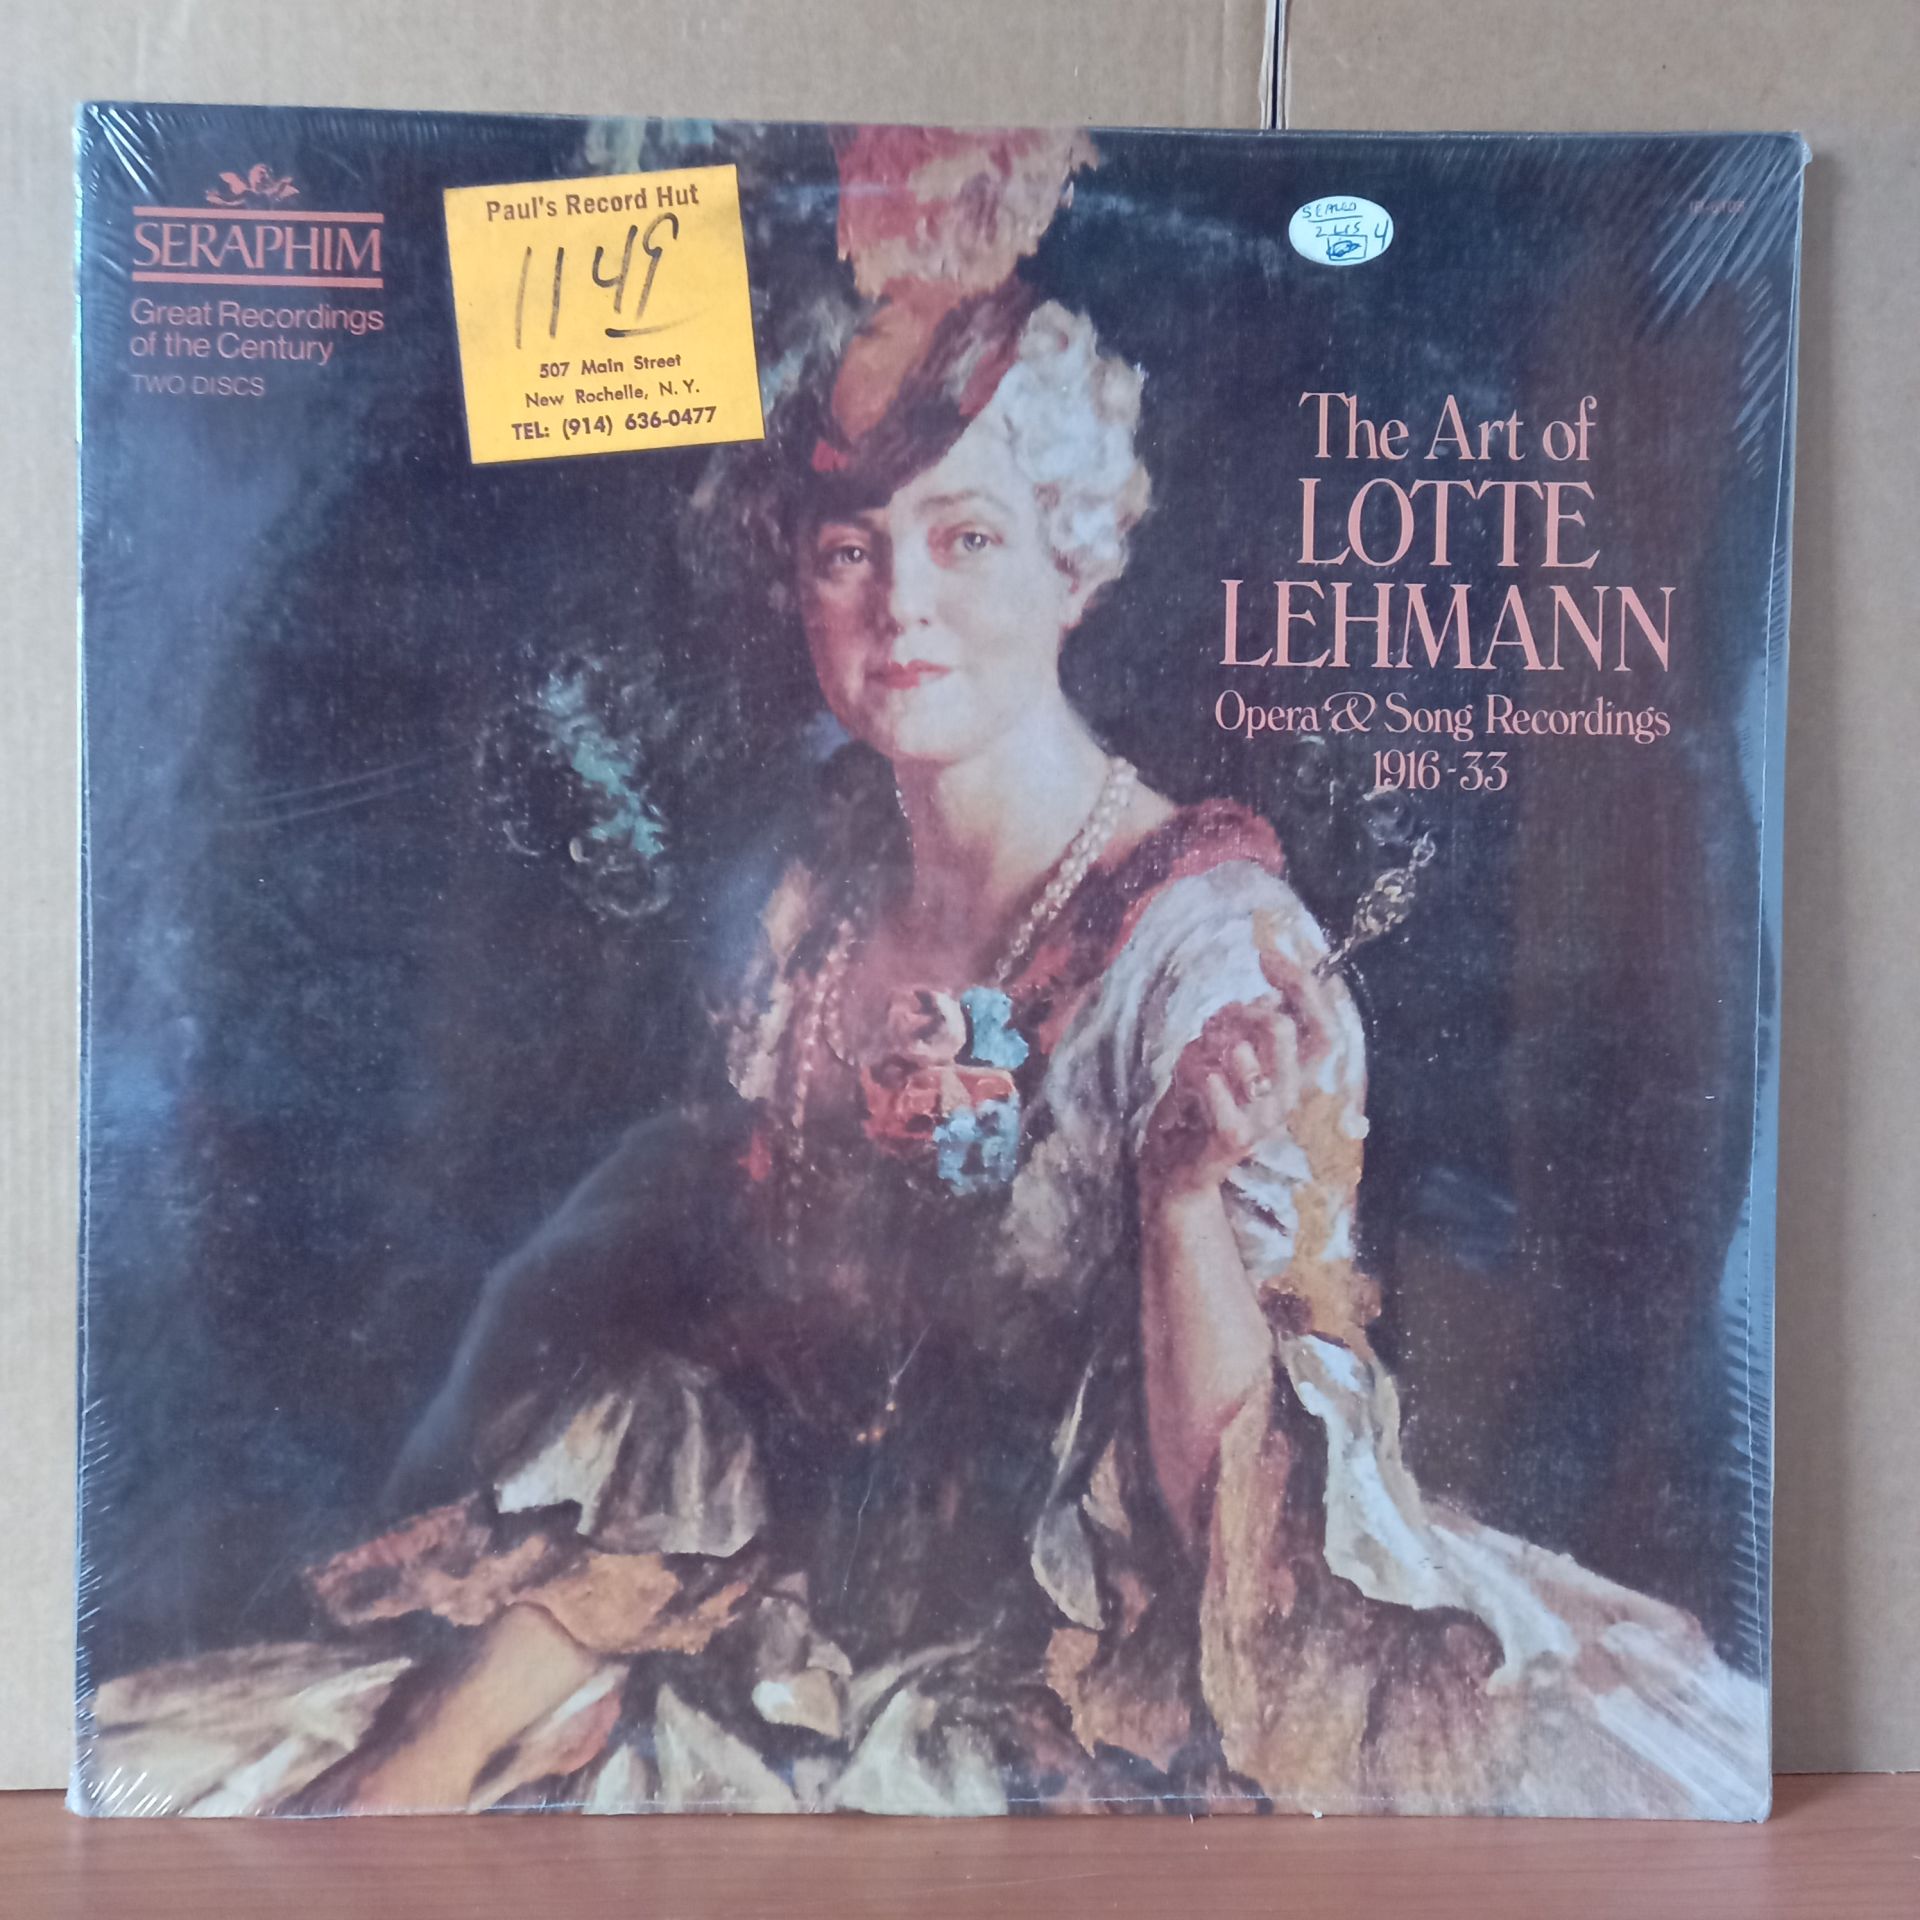 LOTTE LEHMANN – THE ART OF LOTTE LEHMANN / OPERA & SONG RECORDINGS 1916-1933 - 2LP DÖNEM BASKISI SIFIR PLAK